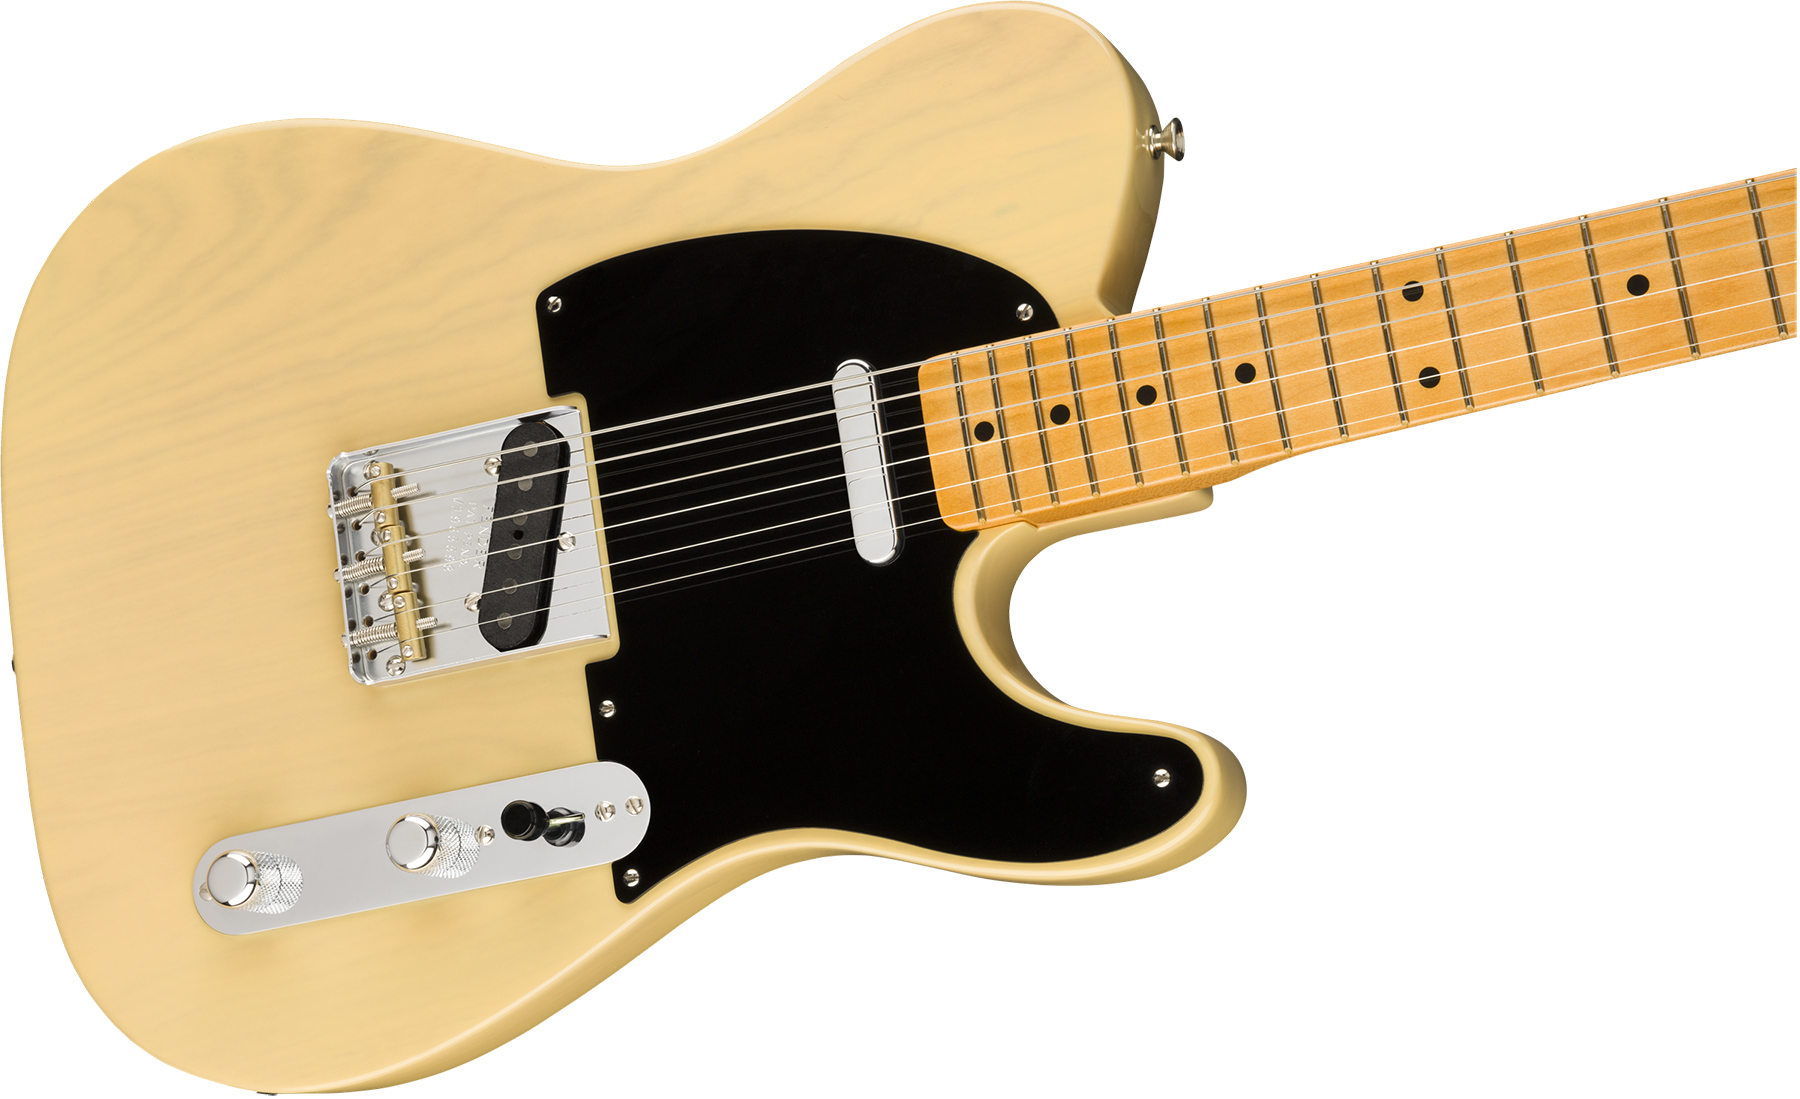 Fender Tele Broadcaster 70th Anniversary Usa Mn - Blackguard Blonde - Tel shape electric guitar - Variation 2